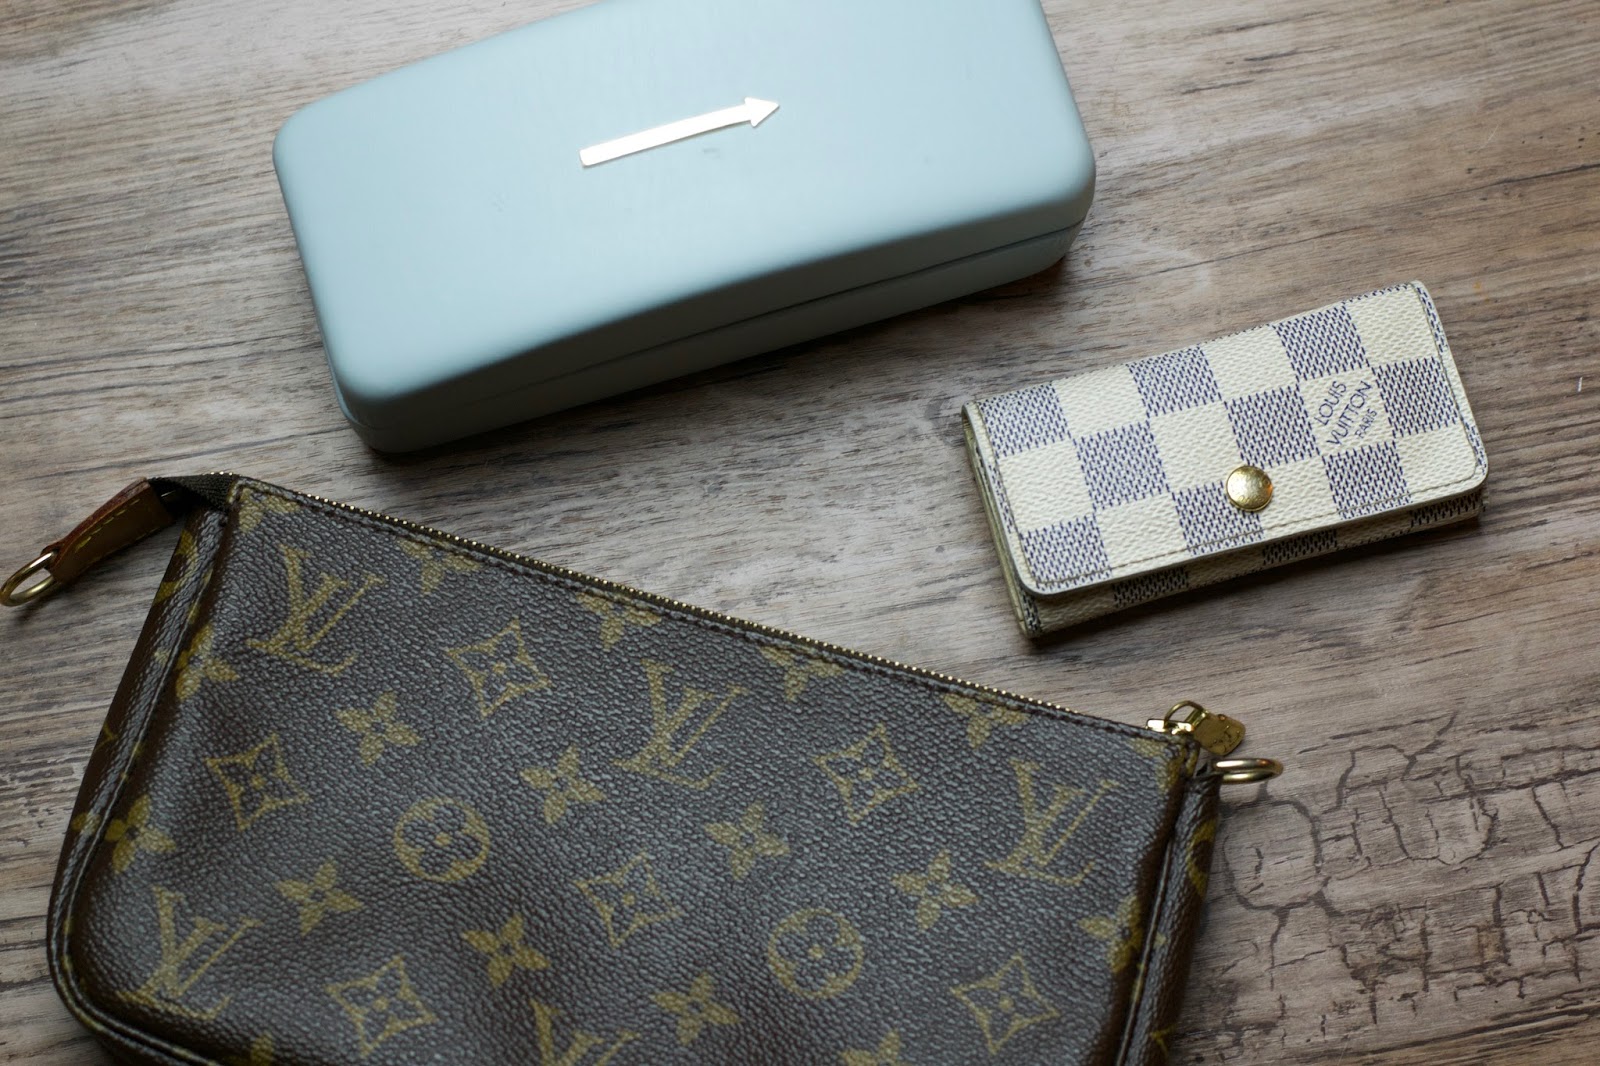 What's in My Bag? Louis Vuitton Speedy 35